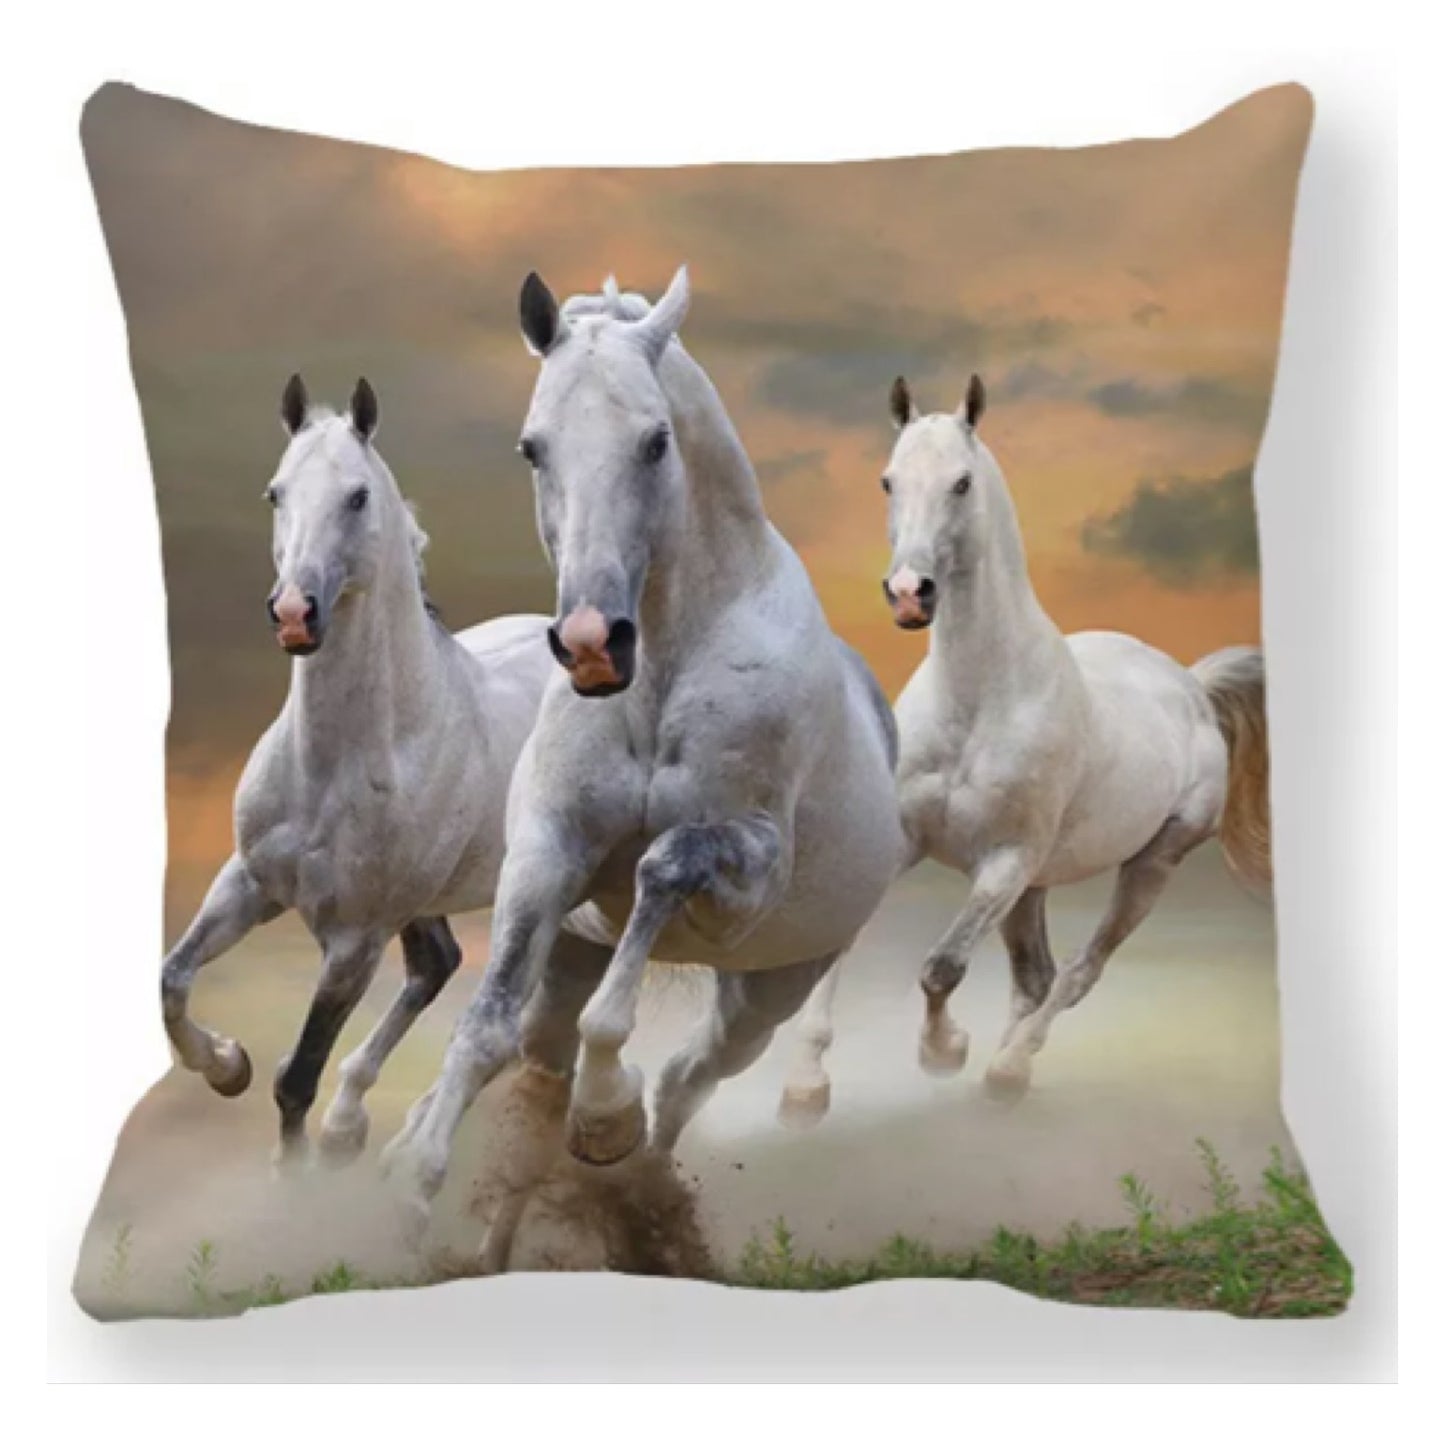 Cushion Cover Horse White Wild Three